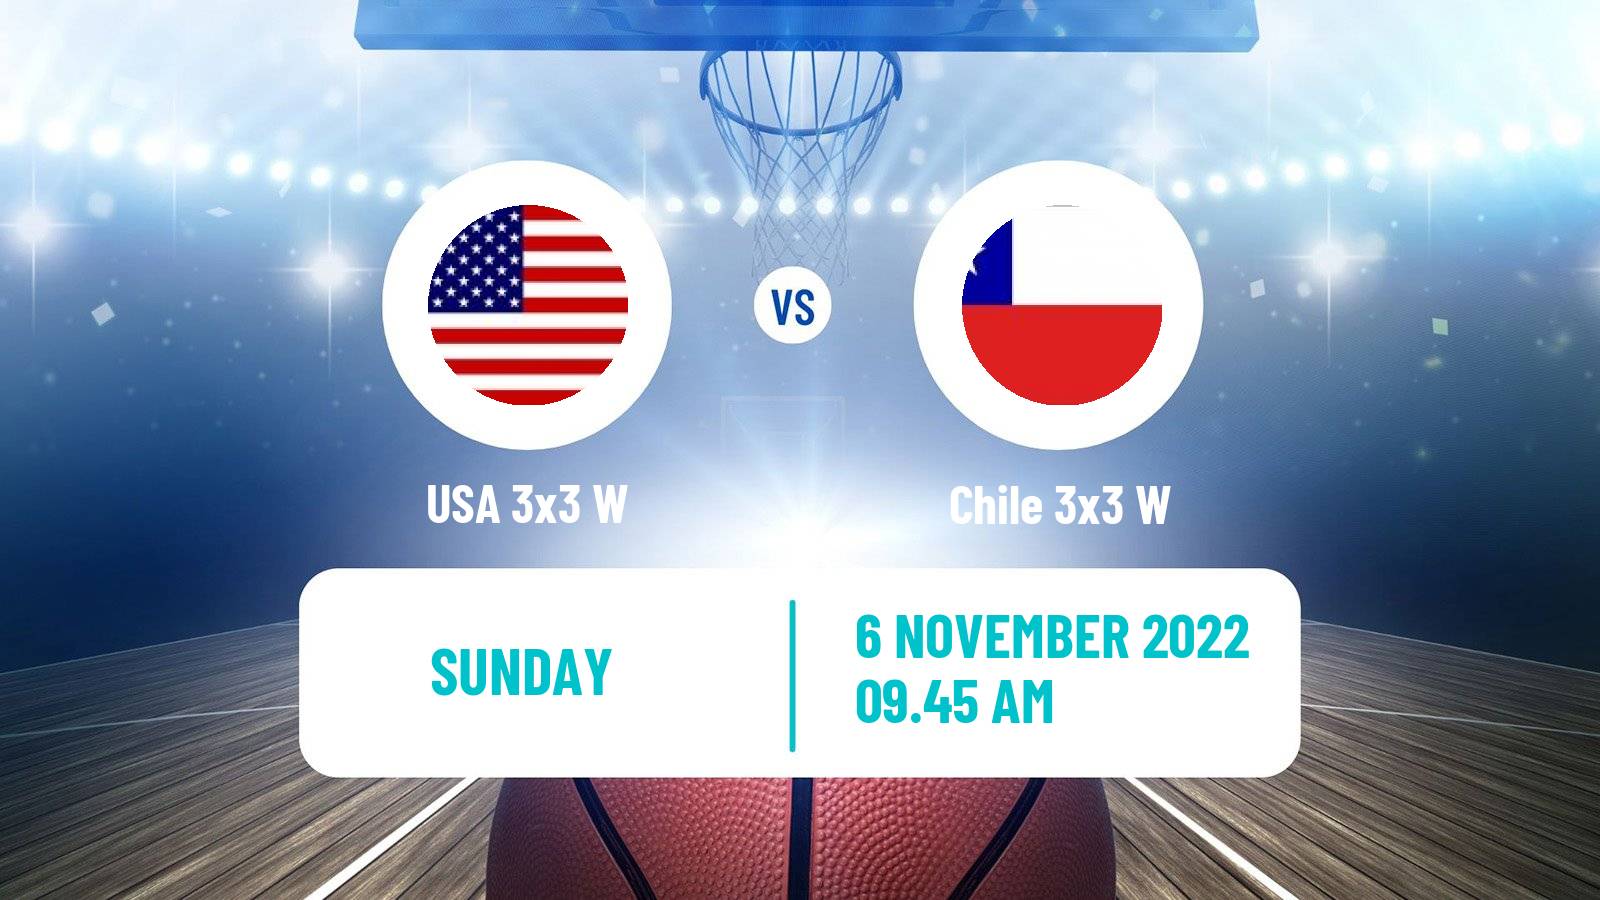 Basketball Americup 3x3 Women USA 3x3 W - Chile 3x3 W